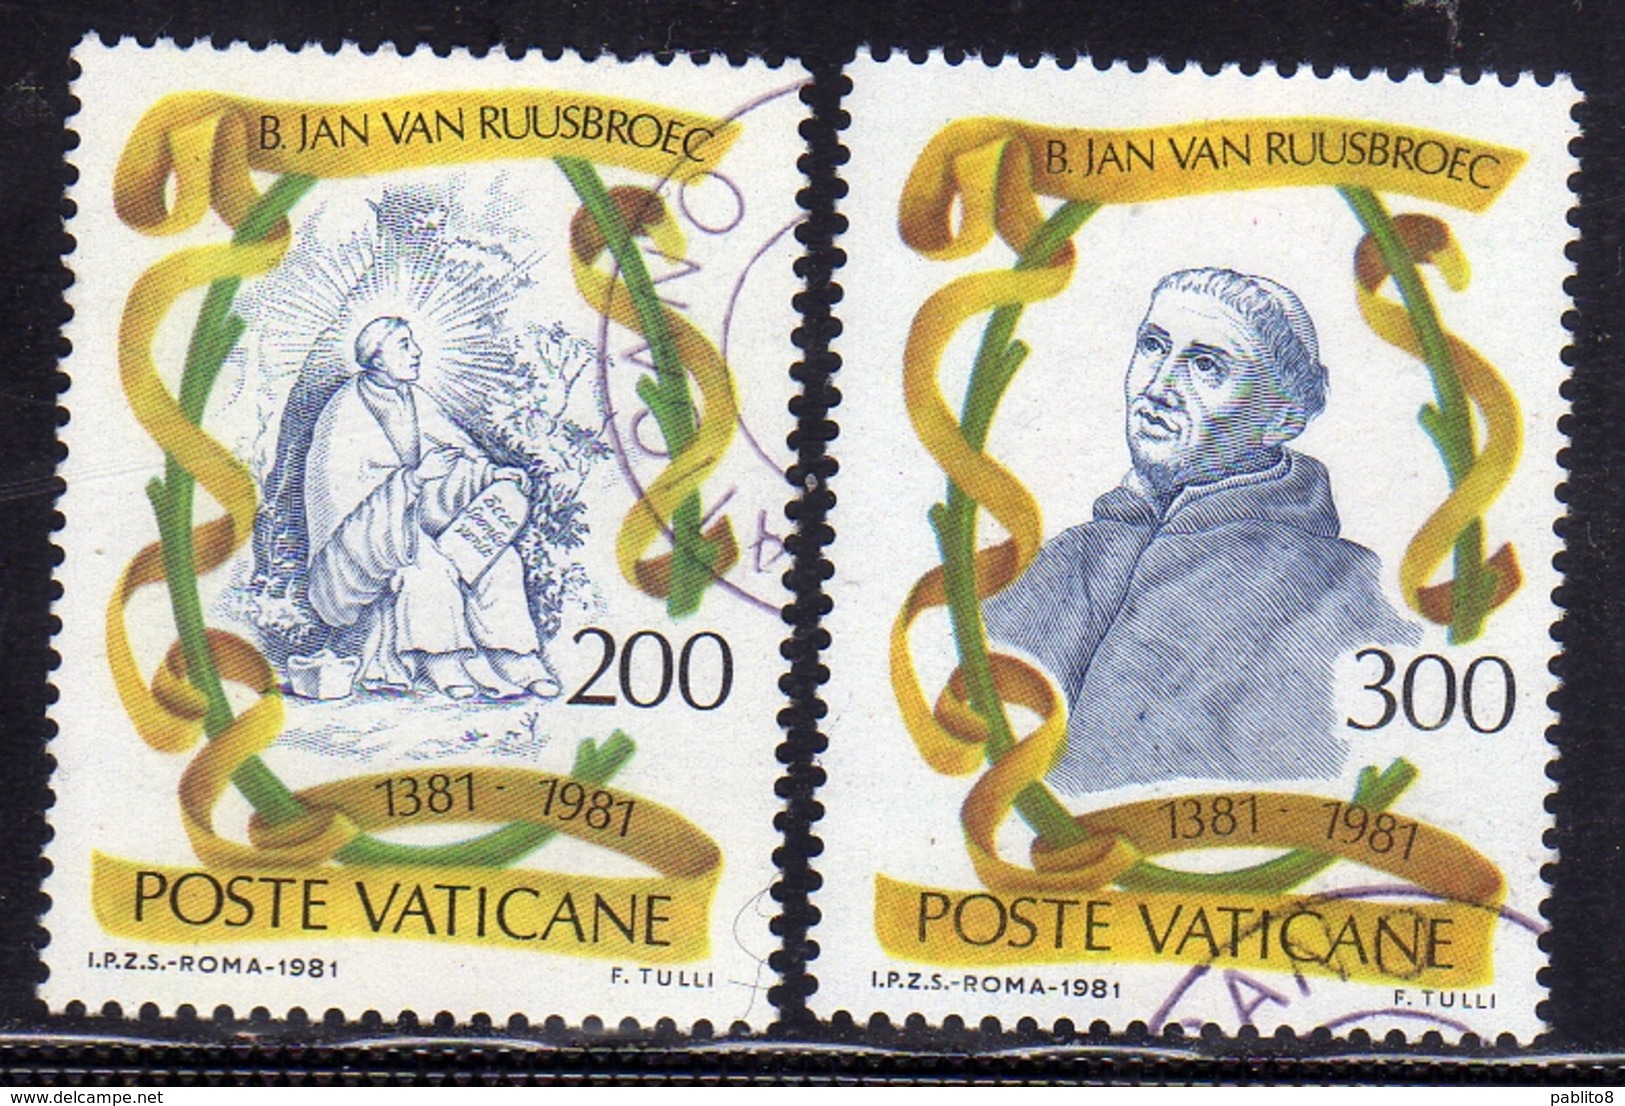 CITTÀ DEL VATICANO VATIKAN VATICAN CITY 1981 BEATO JAN VAN RUUSBROEC BLESSED SERIE COMPLETA SET USATA USED OBLITERE' - Used Stamps